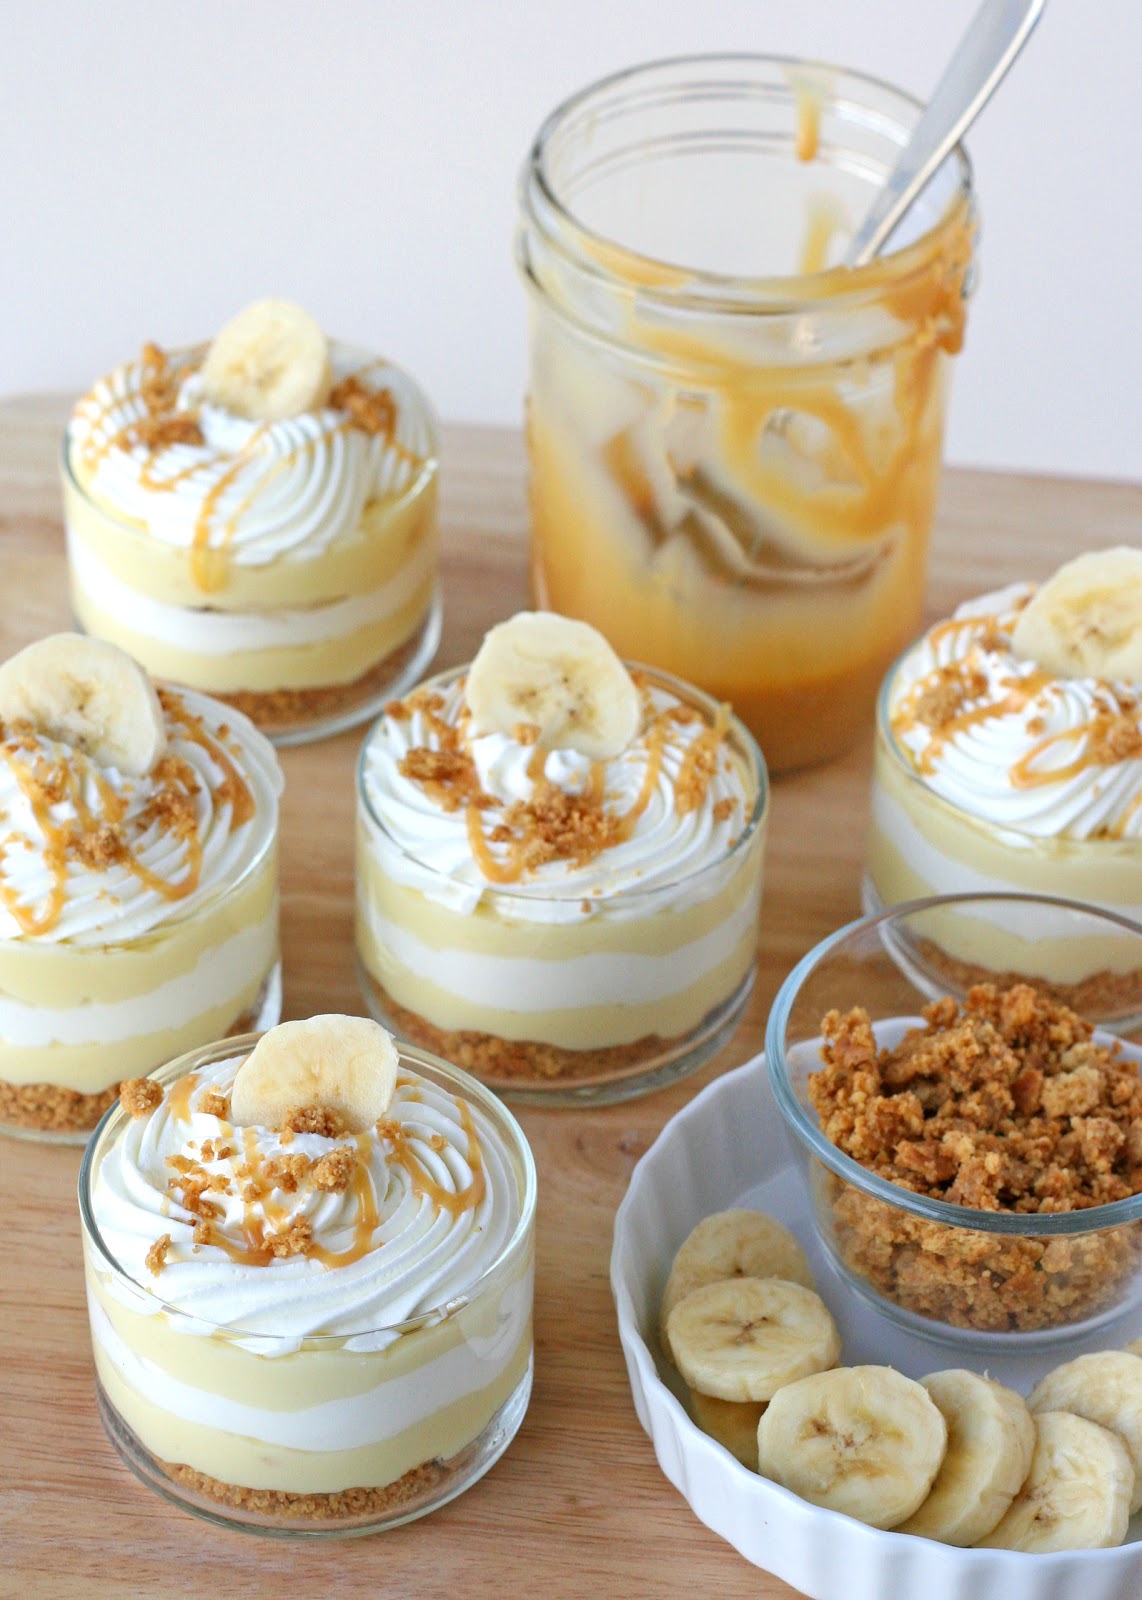 Glorious Treats: Banana Caramel Cream Dessert